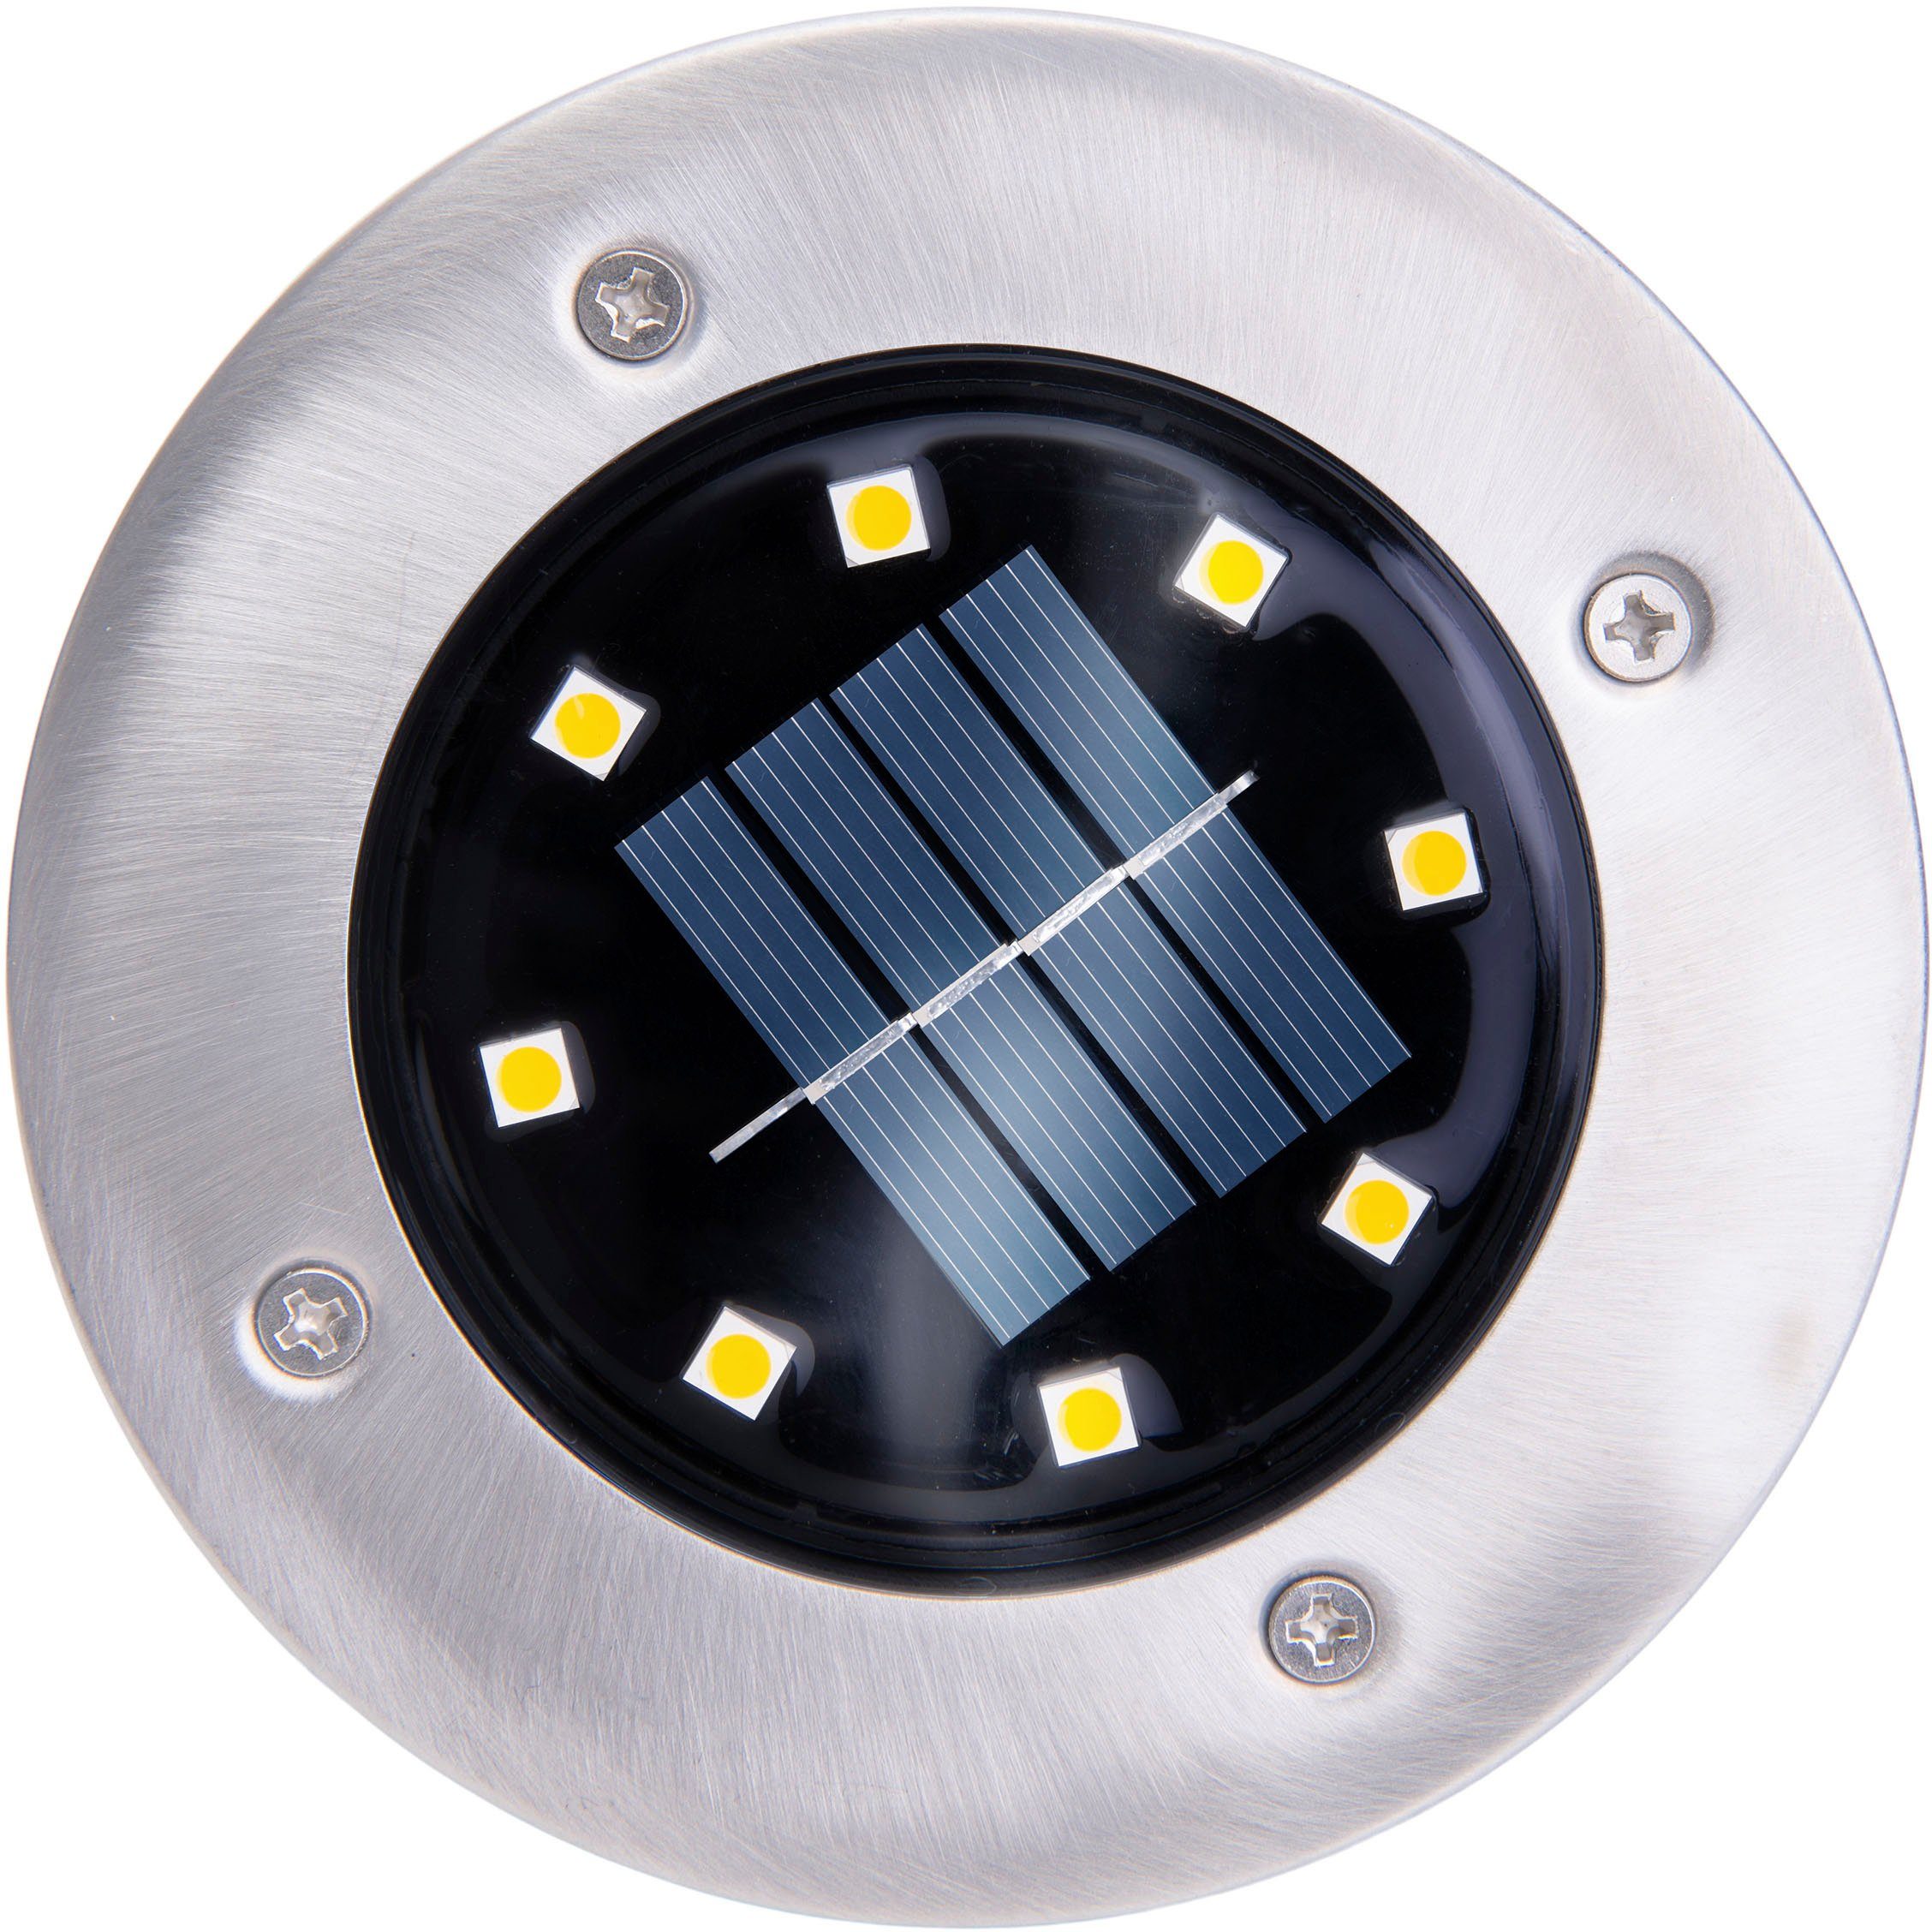 Solar-Boden-Erdspieß,je LED´s; Kian, näve 8 integriert, fest Gartenleuchte incl. 4lm total LED LED LED 3er-Set 0,6W Warmweiß,